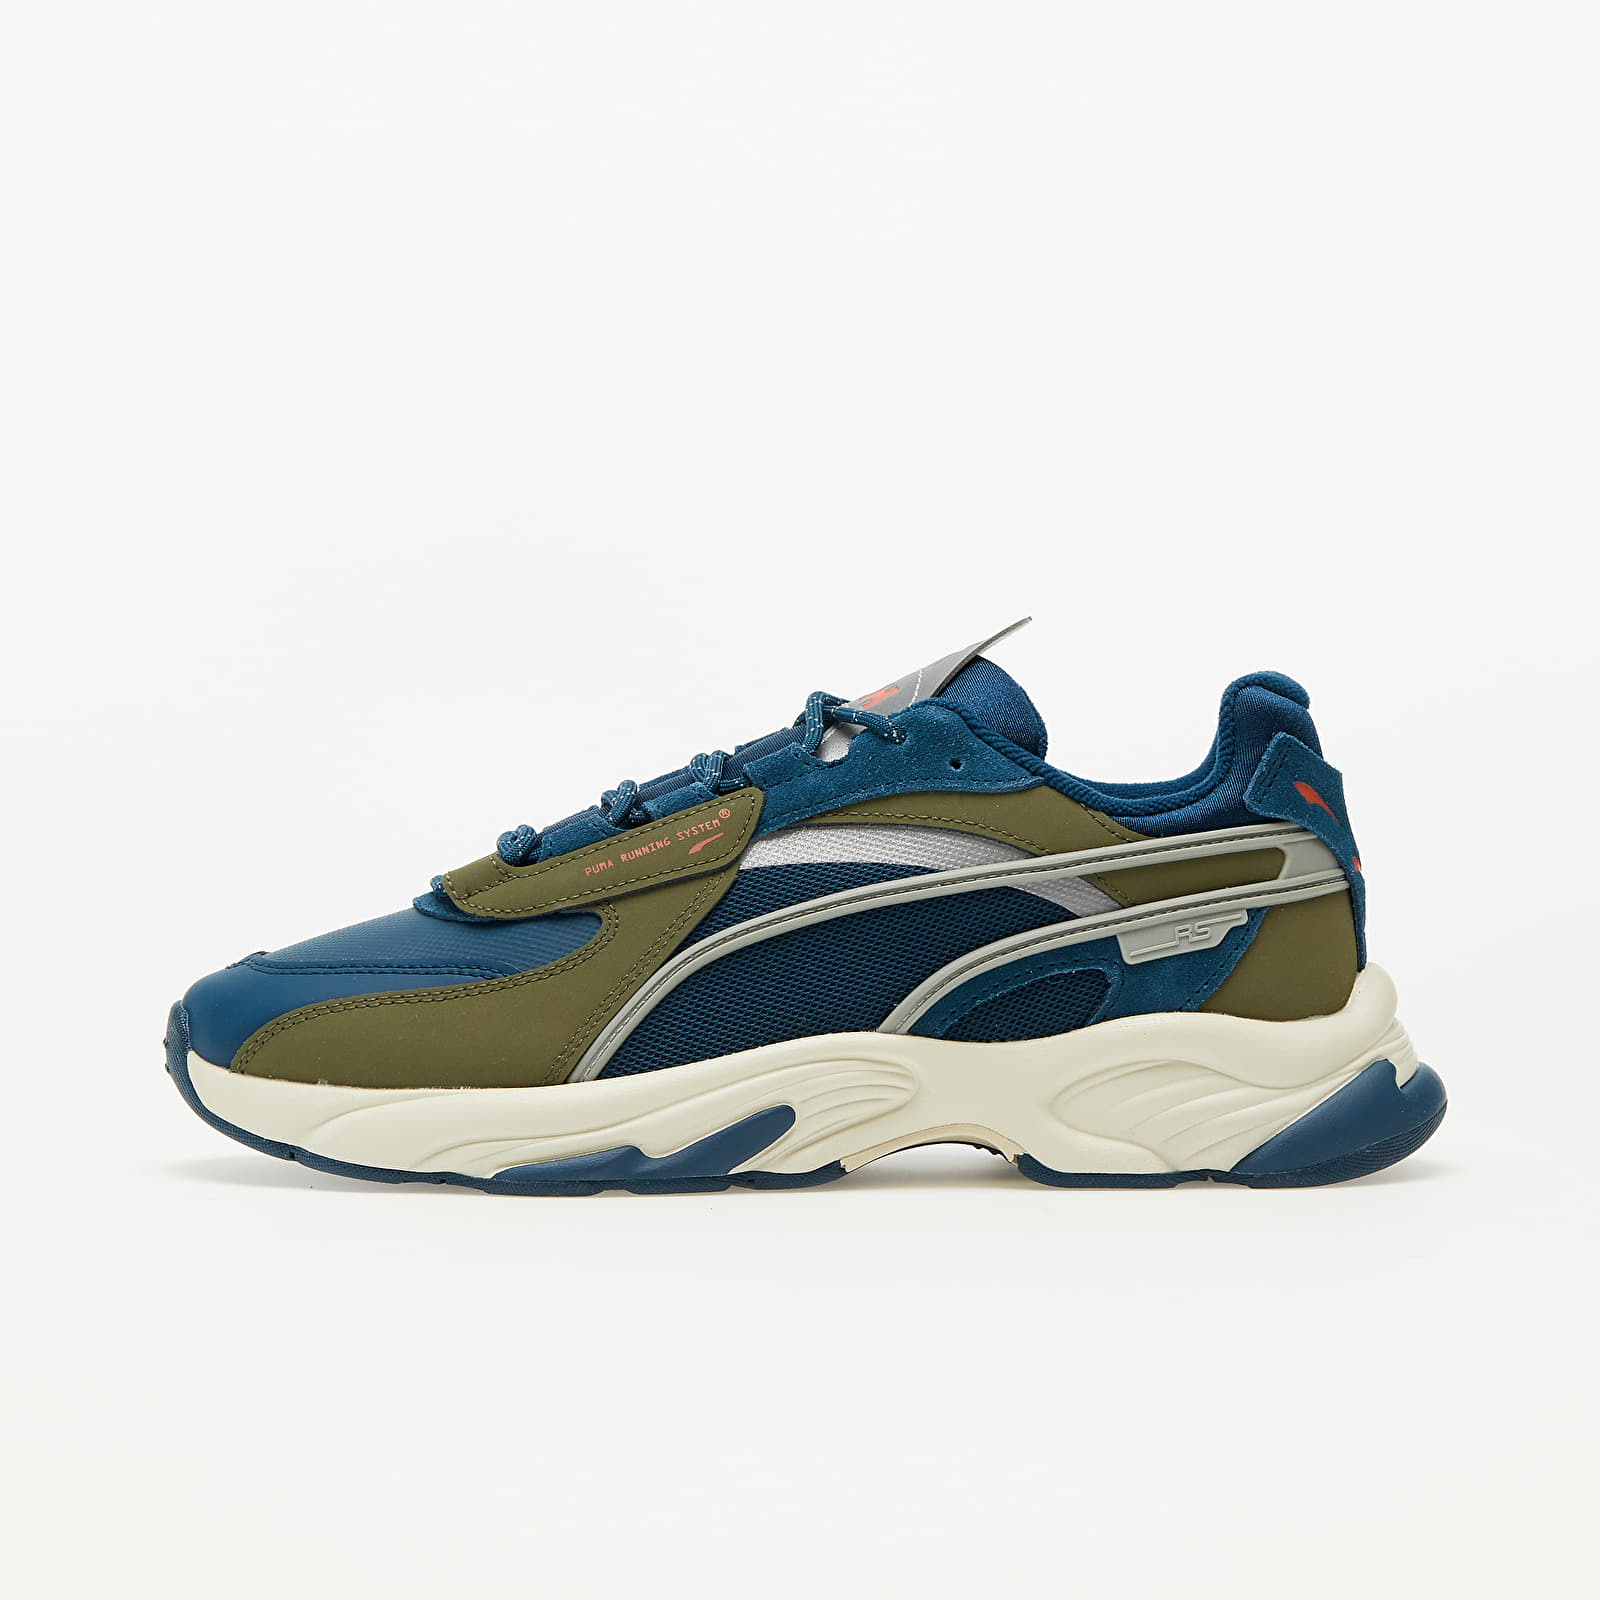 Men's shoes Puma x Helly Hansen RS-Connect Intense Blue-White Asparagus